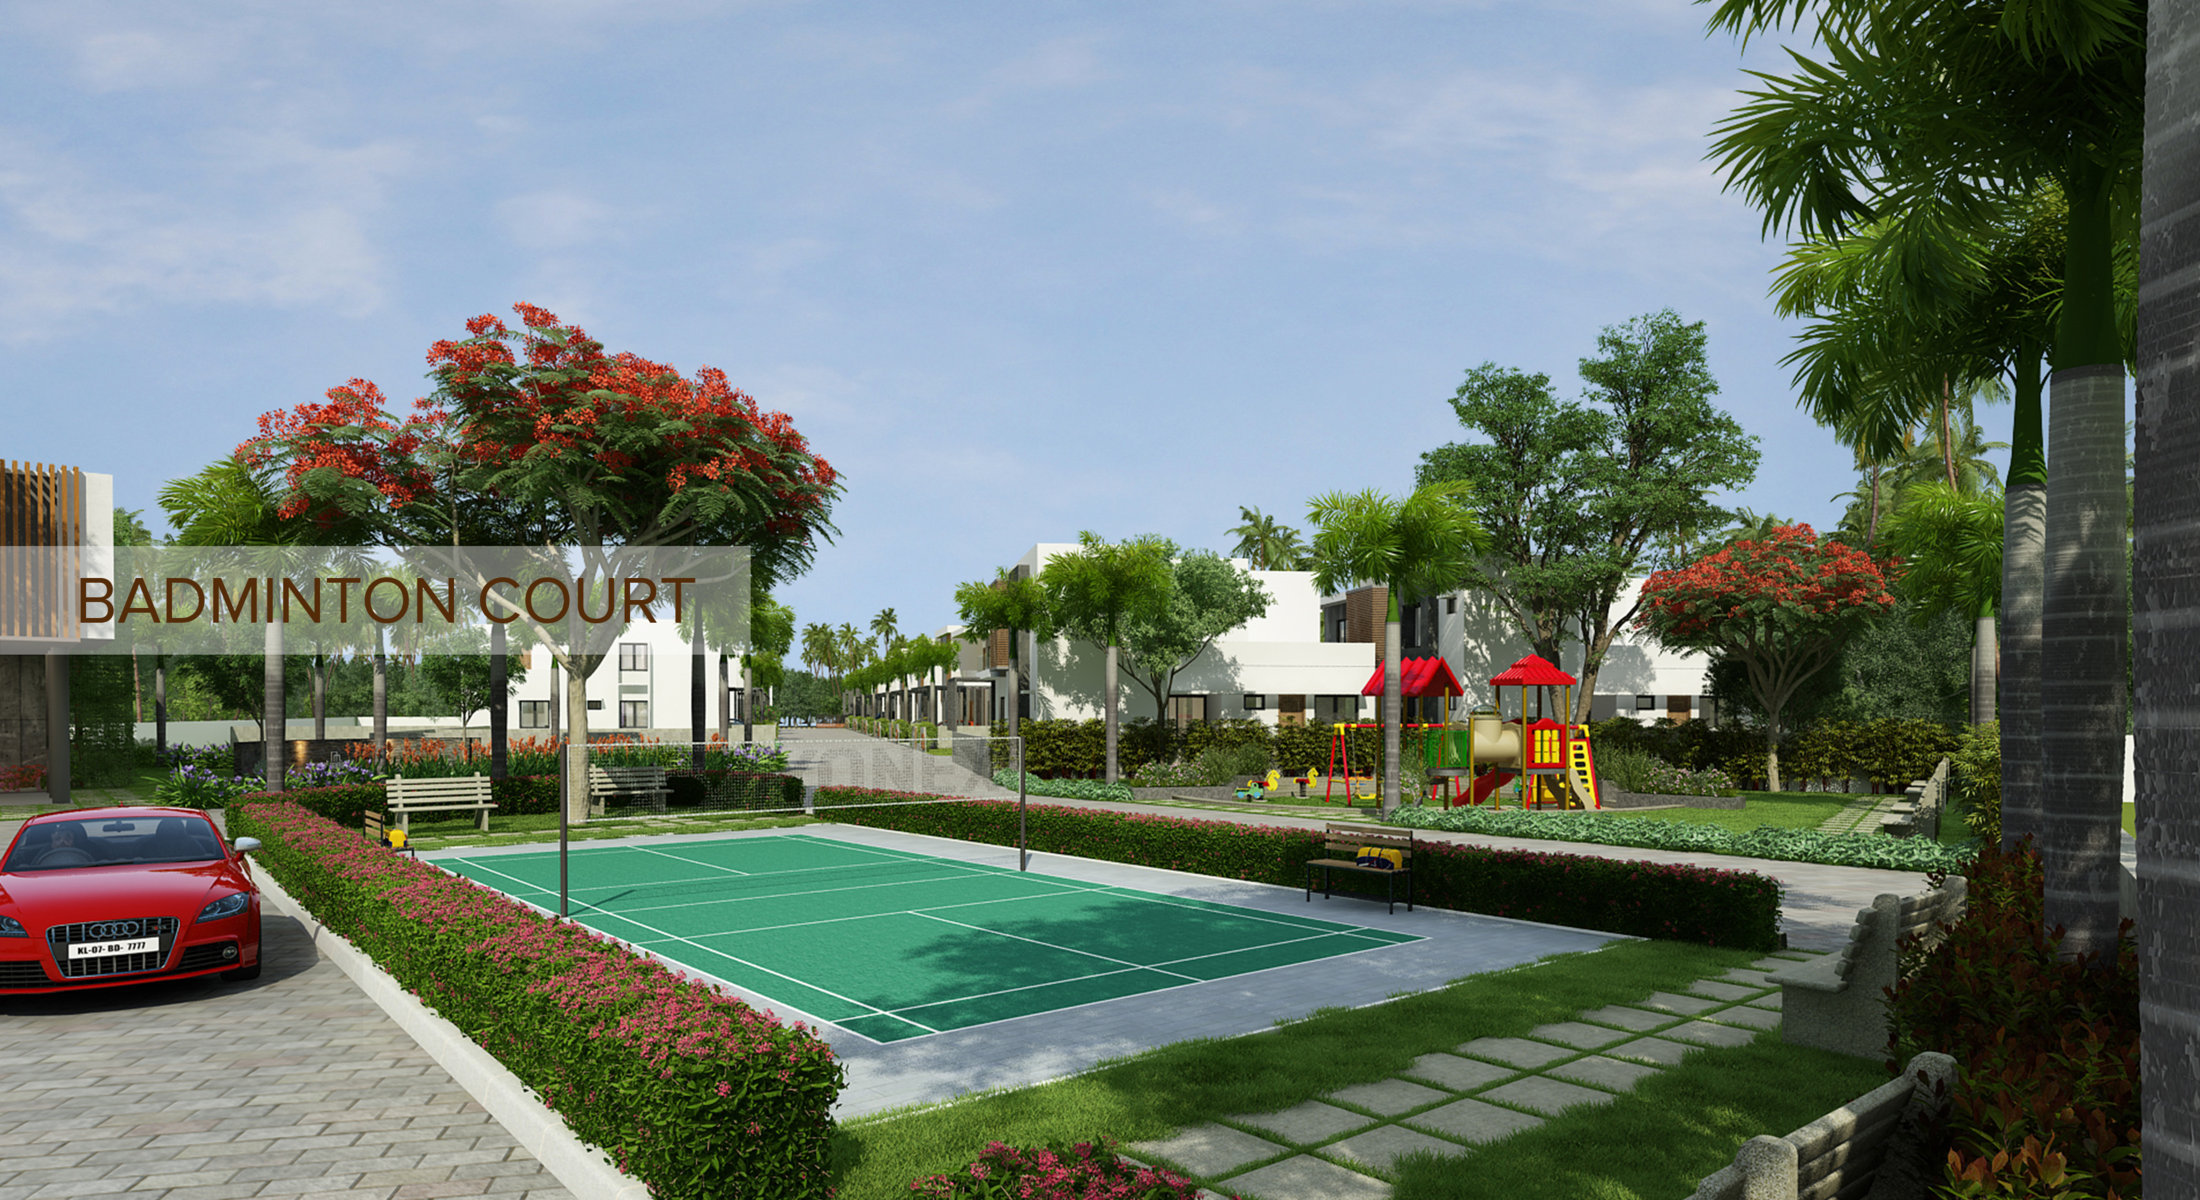 4 BHK Luxury Villa Projects in Pathanamthitta